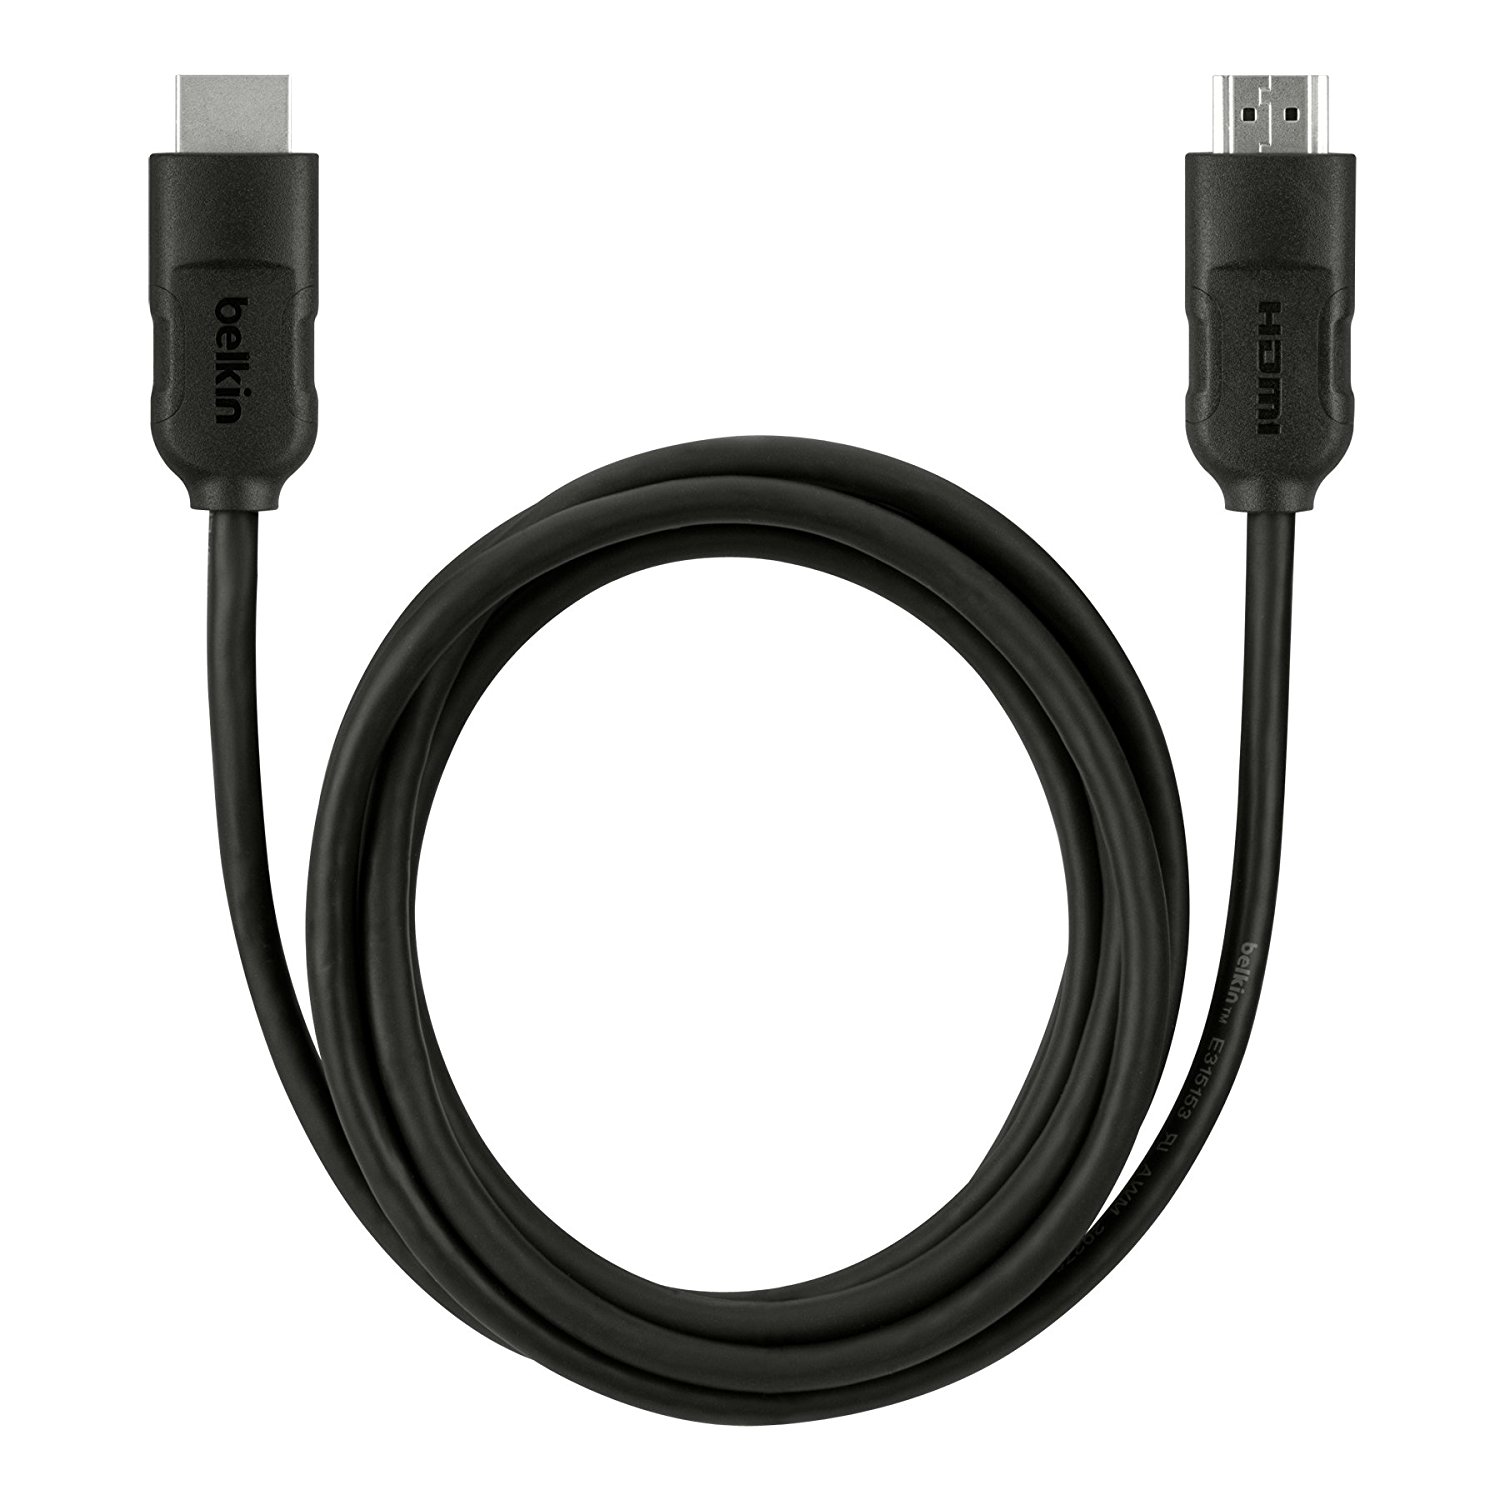 Cable HDMI macho a hembra de Belkin Cable HDMI 2.0 / 4K, 50 pies